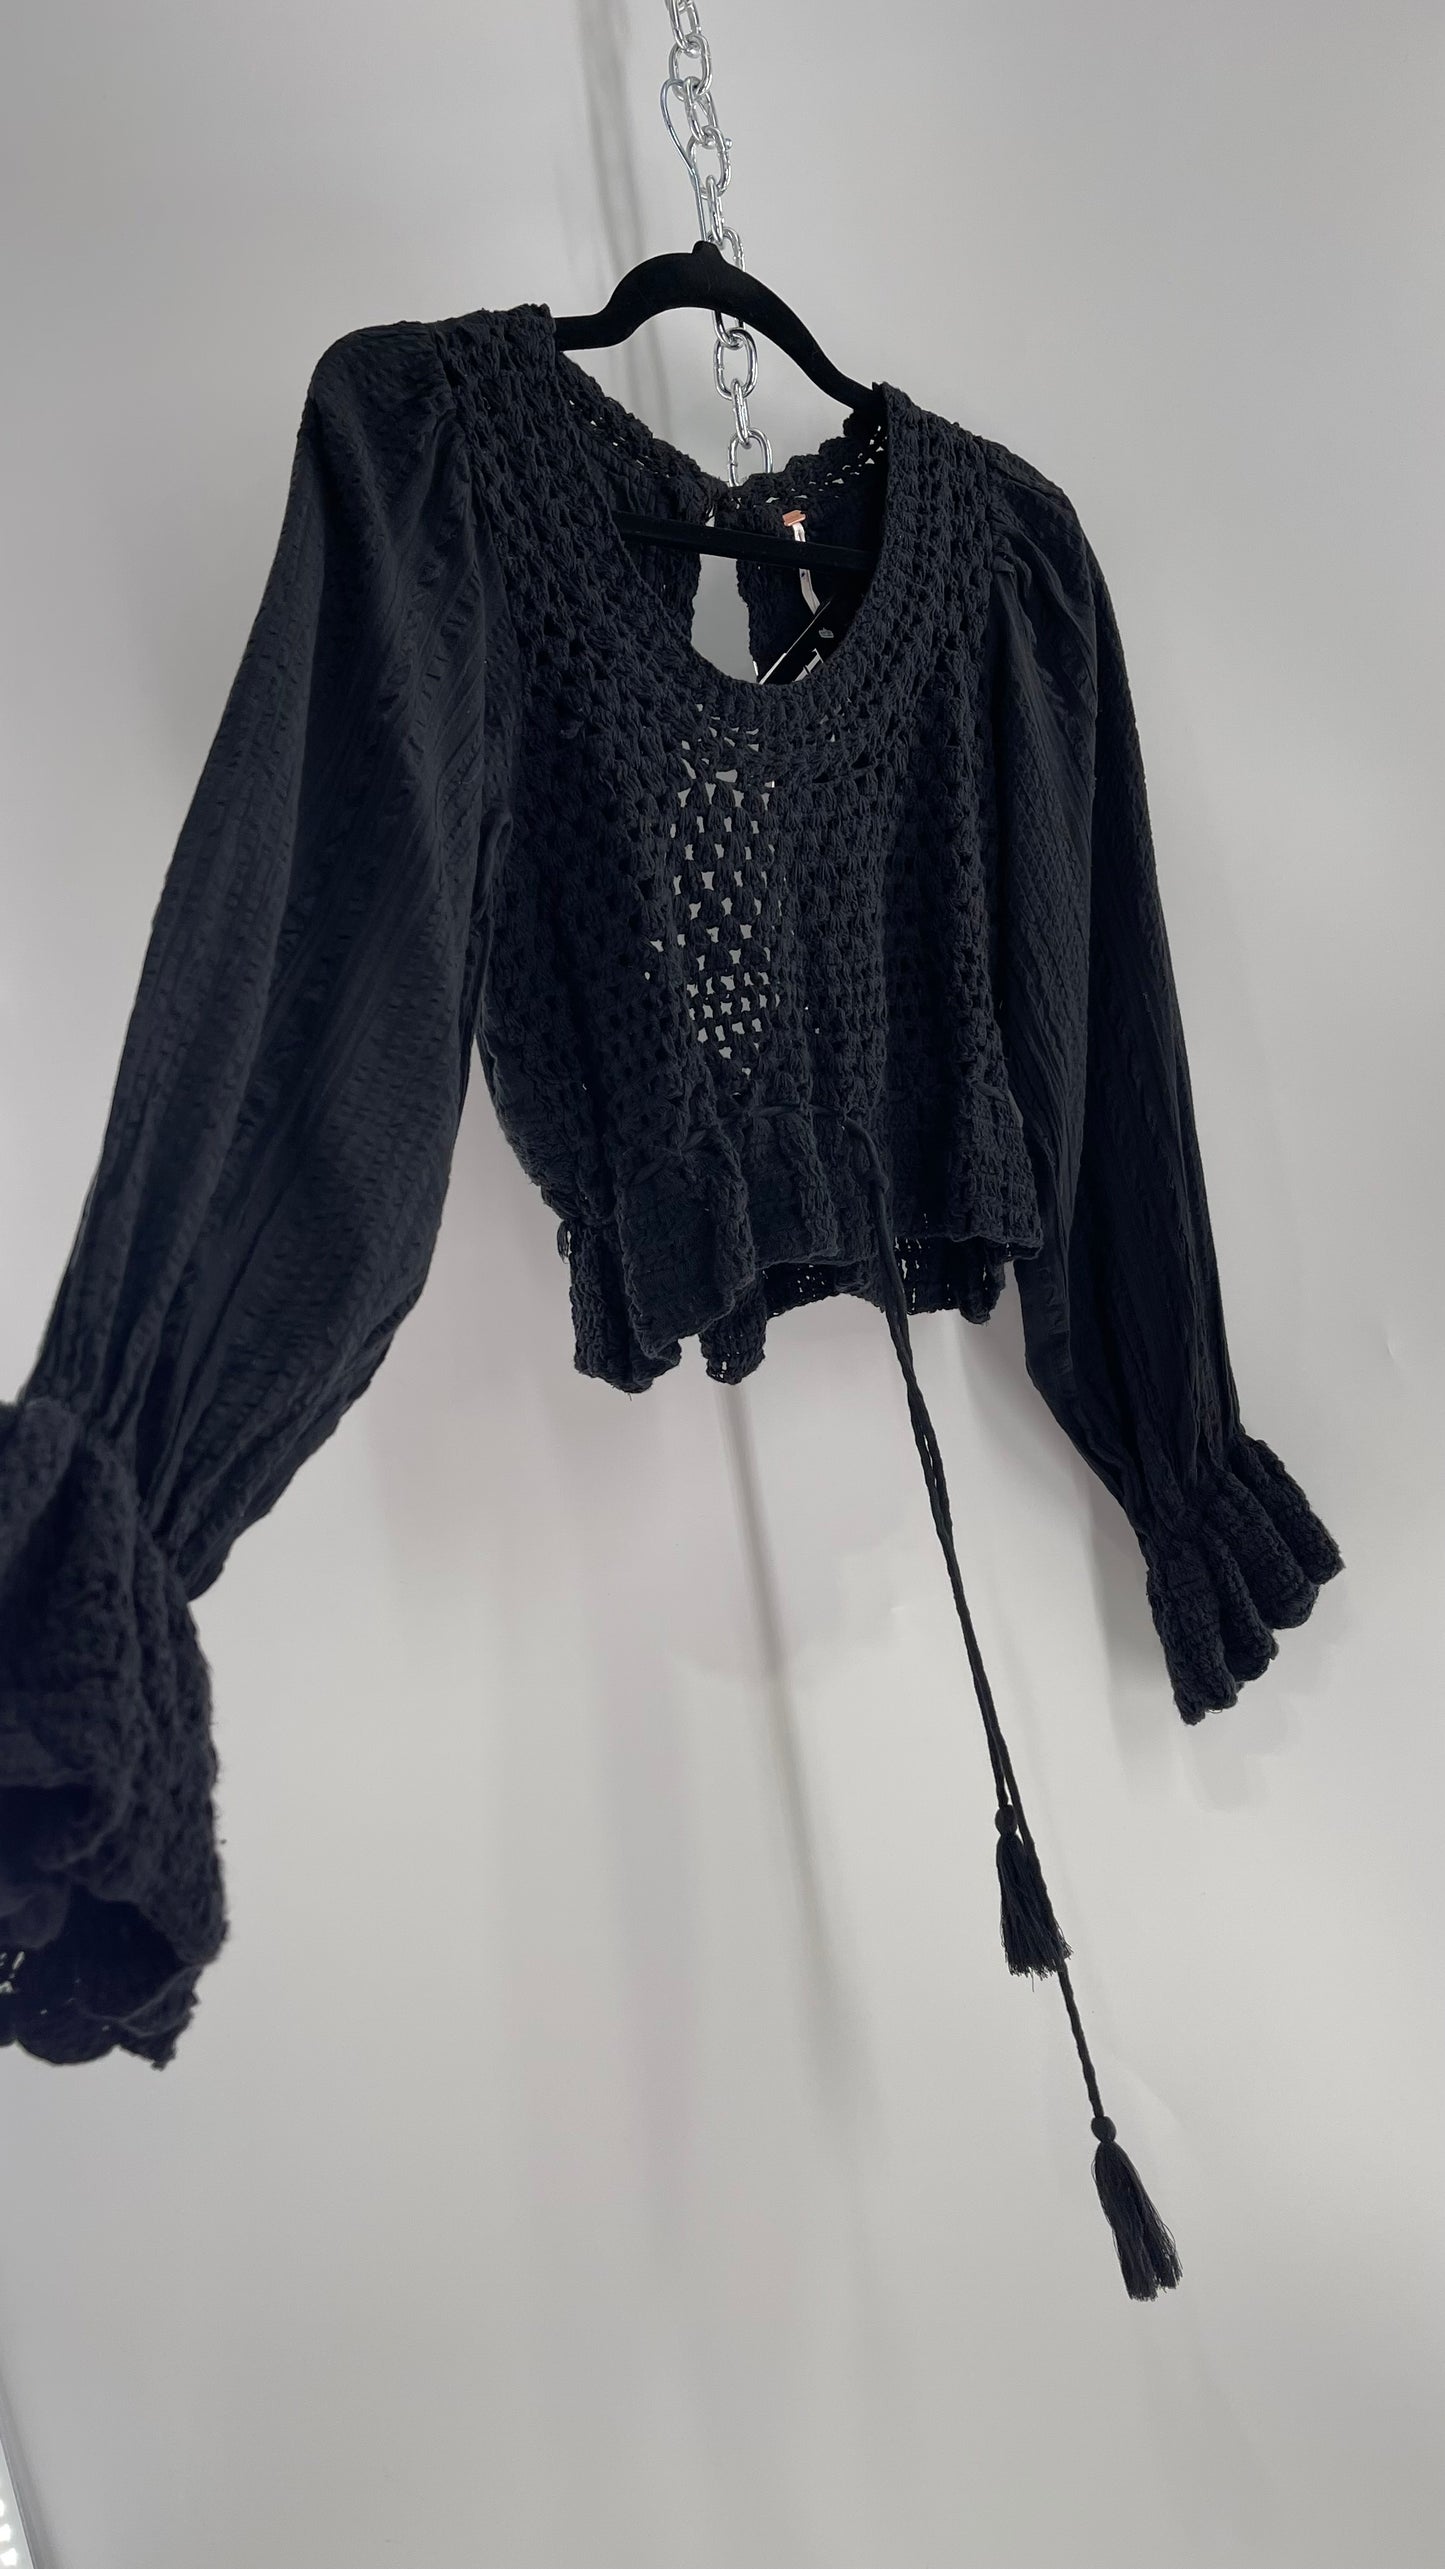 Free People Black Crochet “Megan” Top (XS)